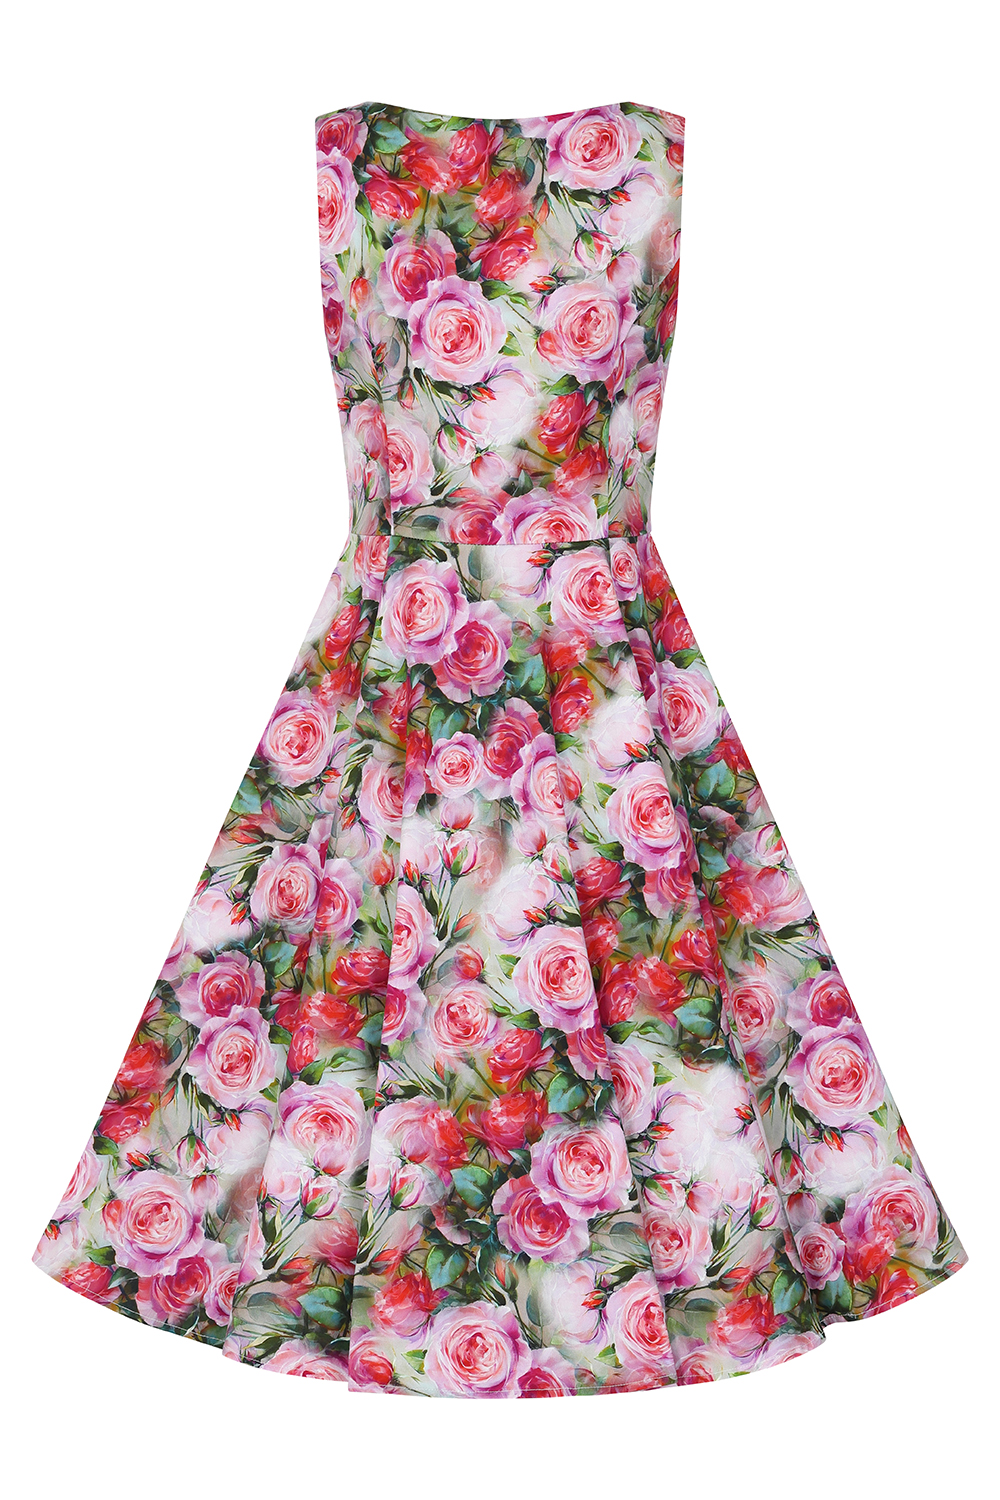 Lola Floral Swing Dress - Hearts & Roses London